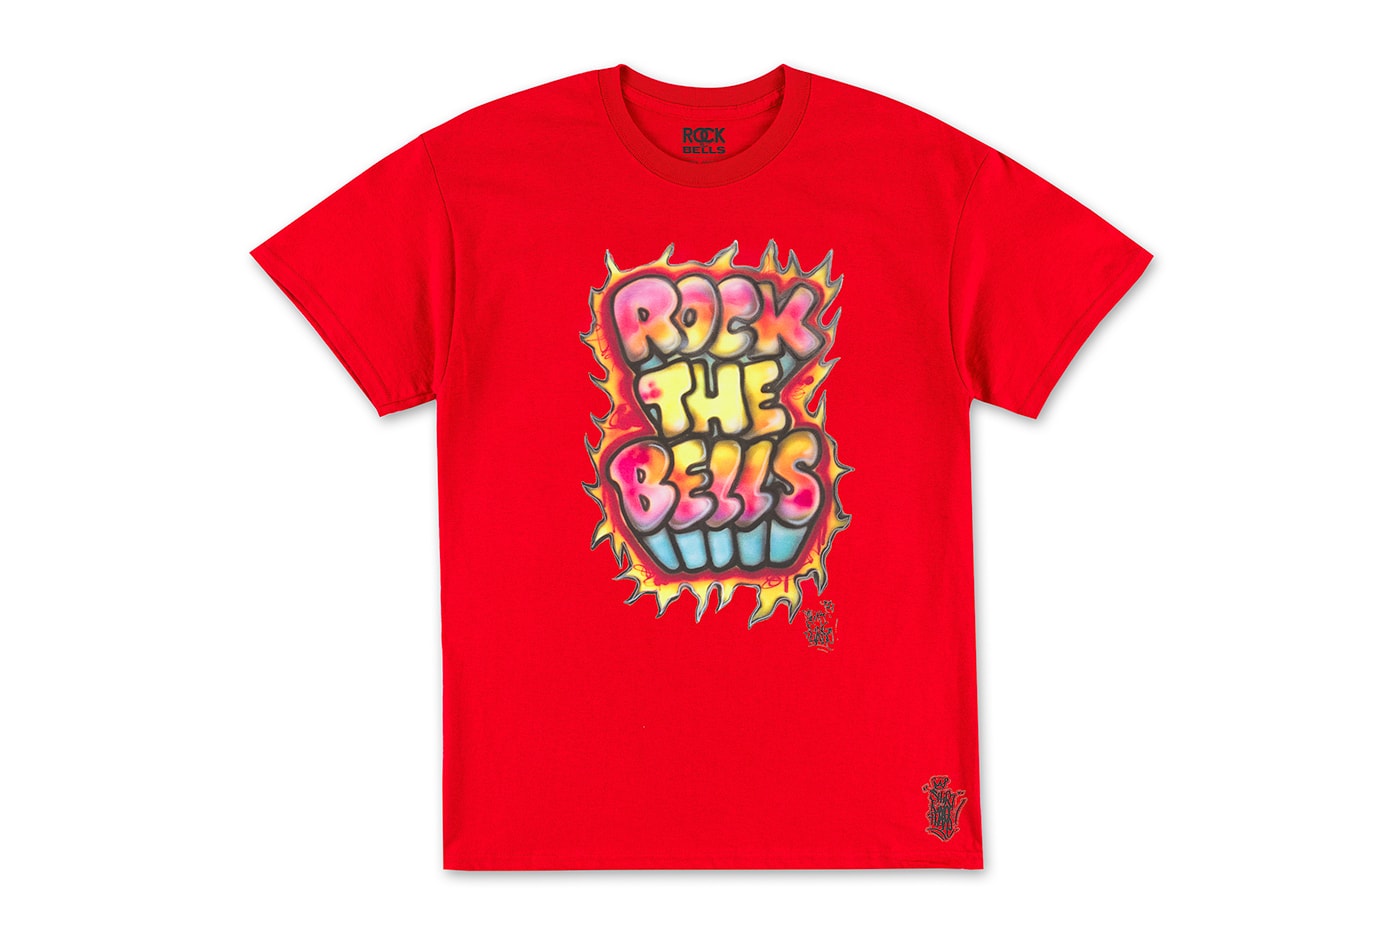 Shirt King Phade x Rock the Bells Graffiti Streetwear Capsule t-shirts bubble airbrush prints ll cool j hip-hop street style drop info 